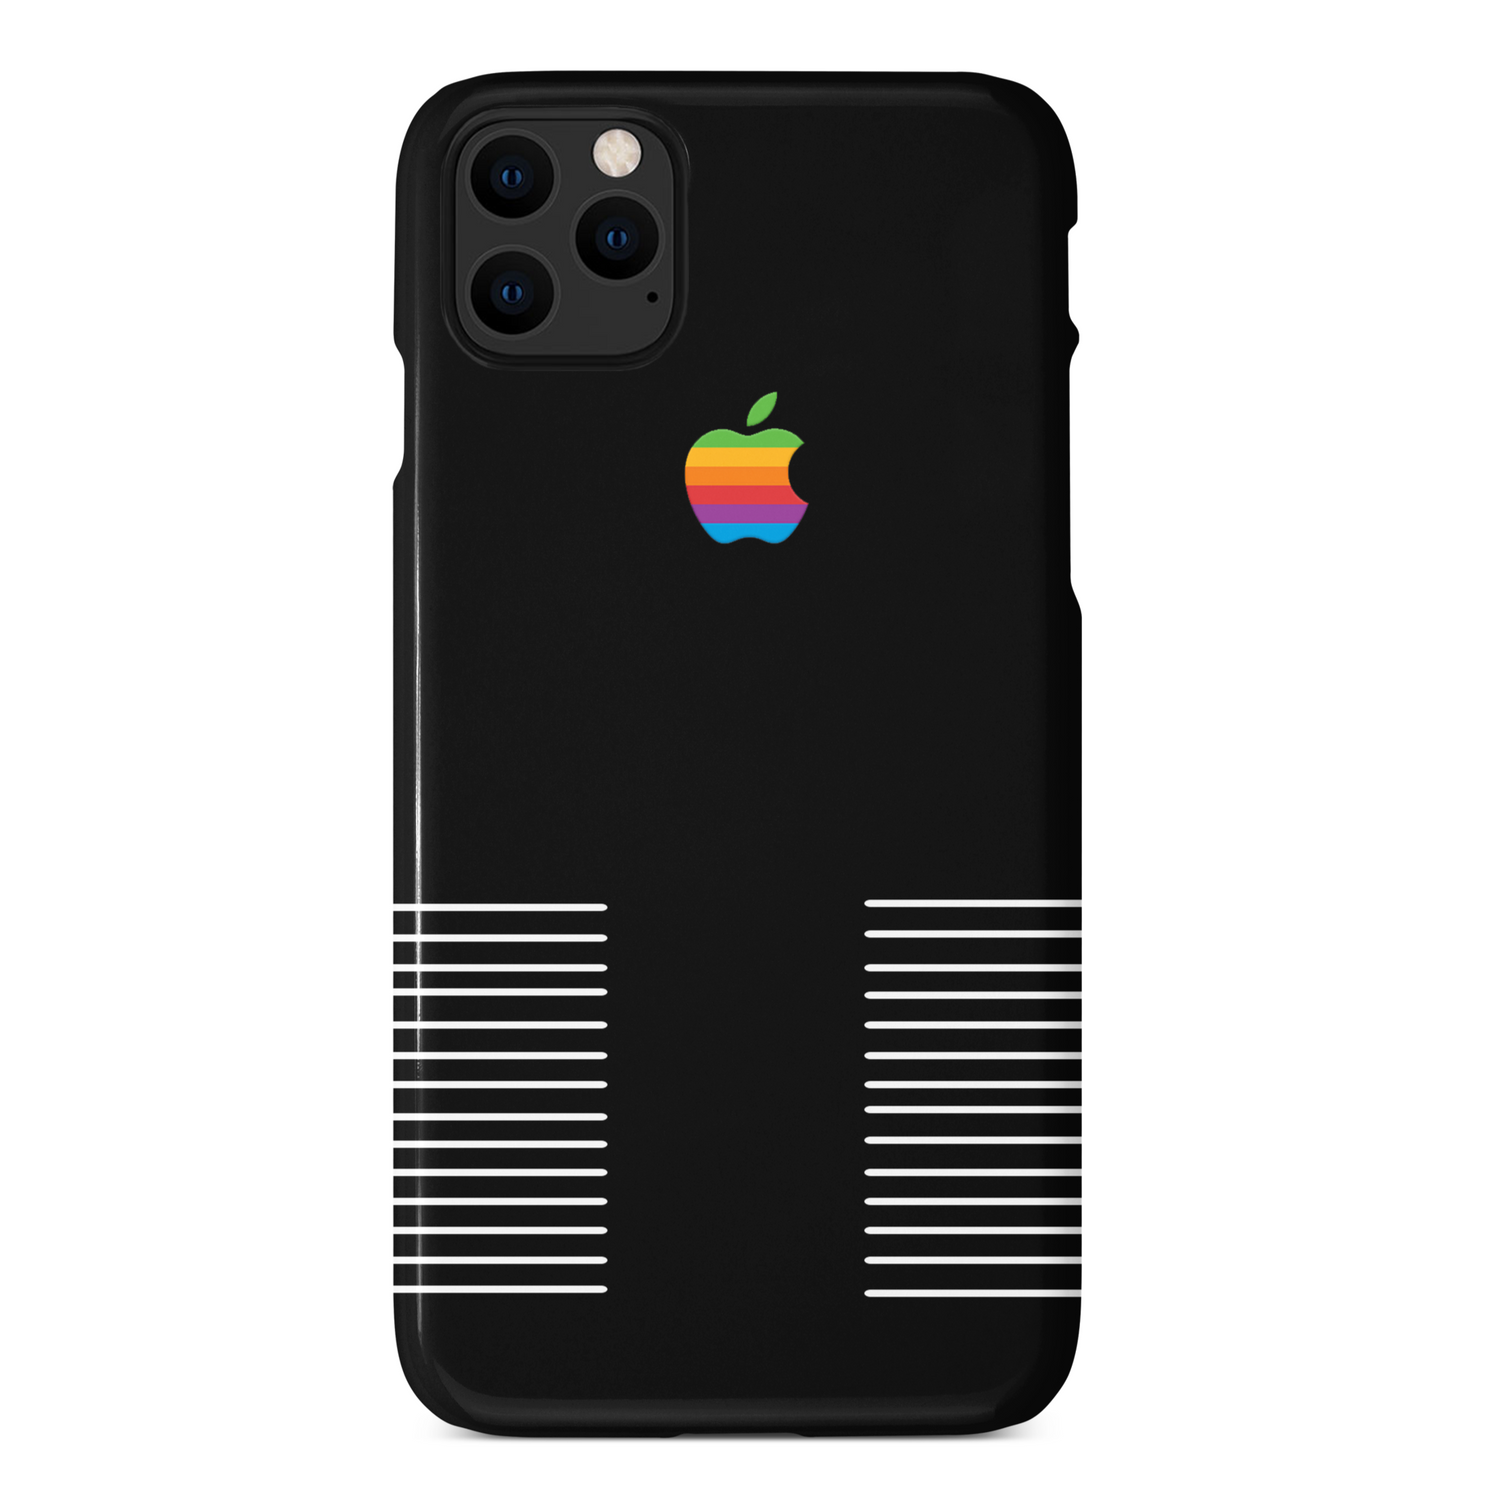 Iphone 11 11 Pro Max Retro Macintosh Apple Vintage Old Rainbow Logo Black White Iphone Case Casejungle